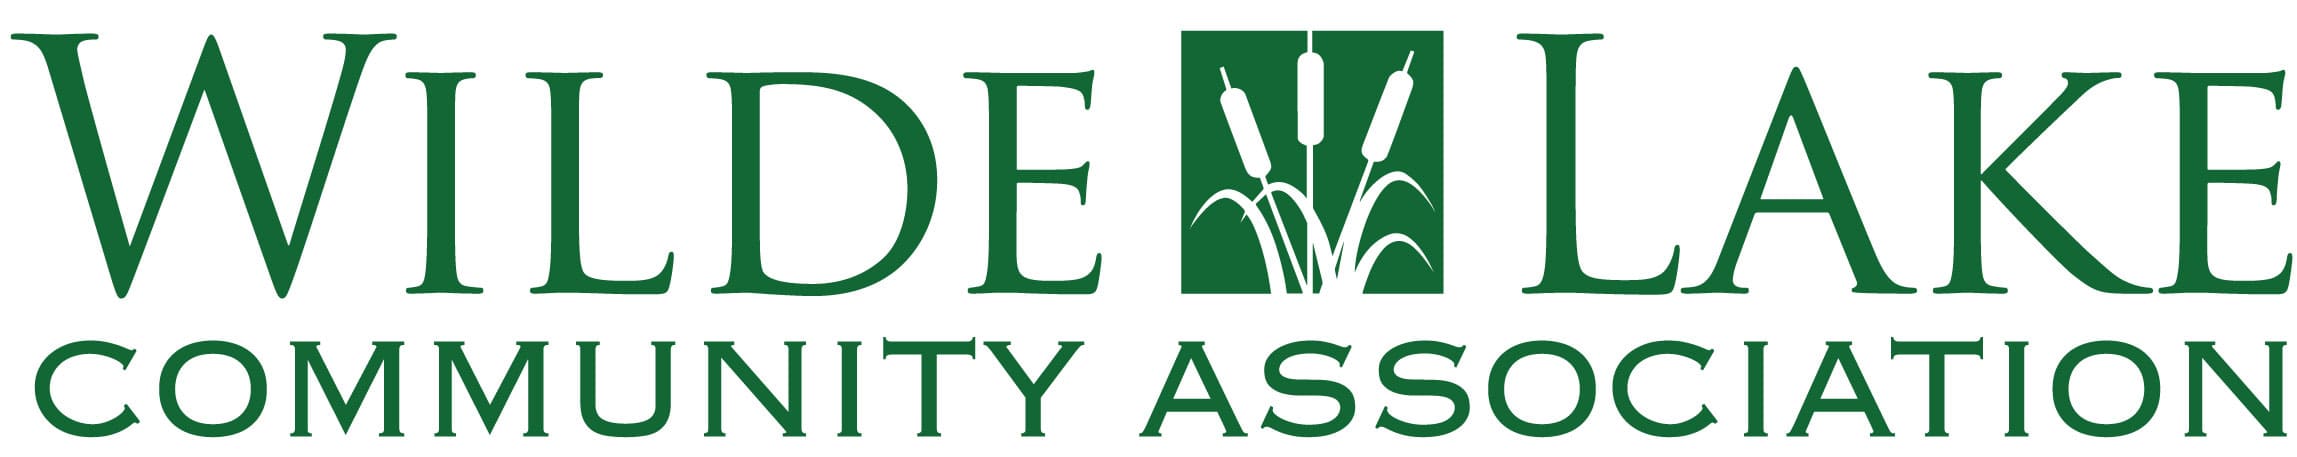 Wilde Lake Community Association Logo